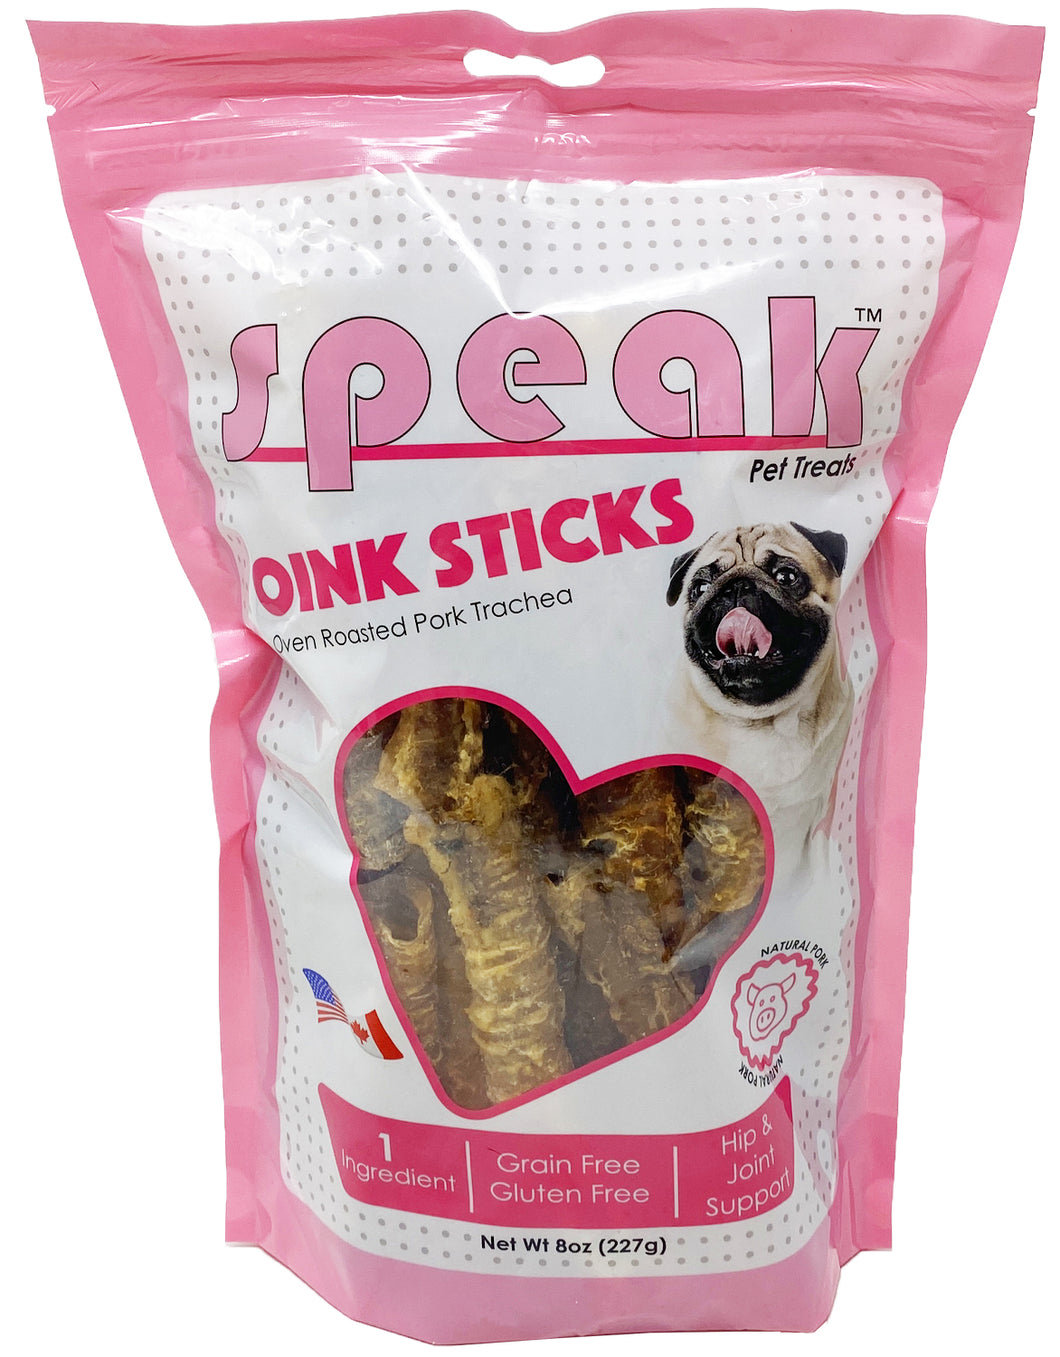 Oink Sticks